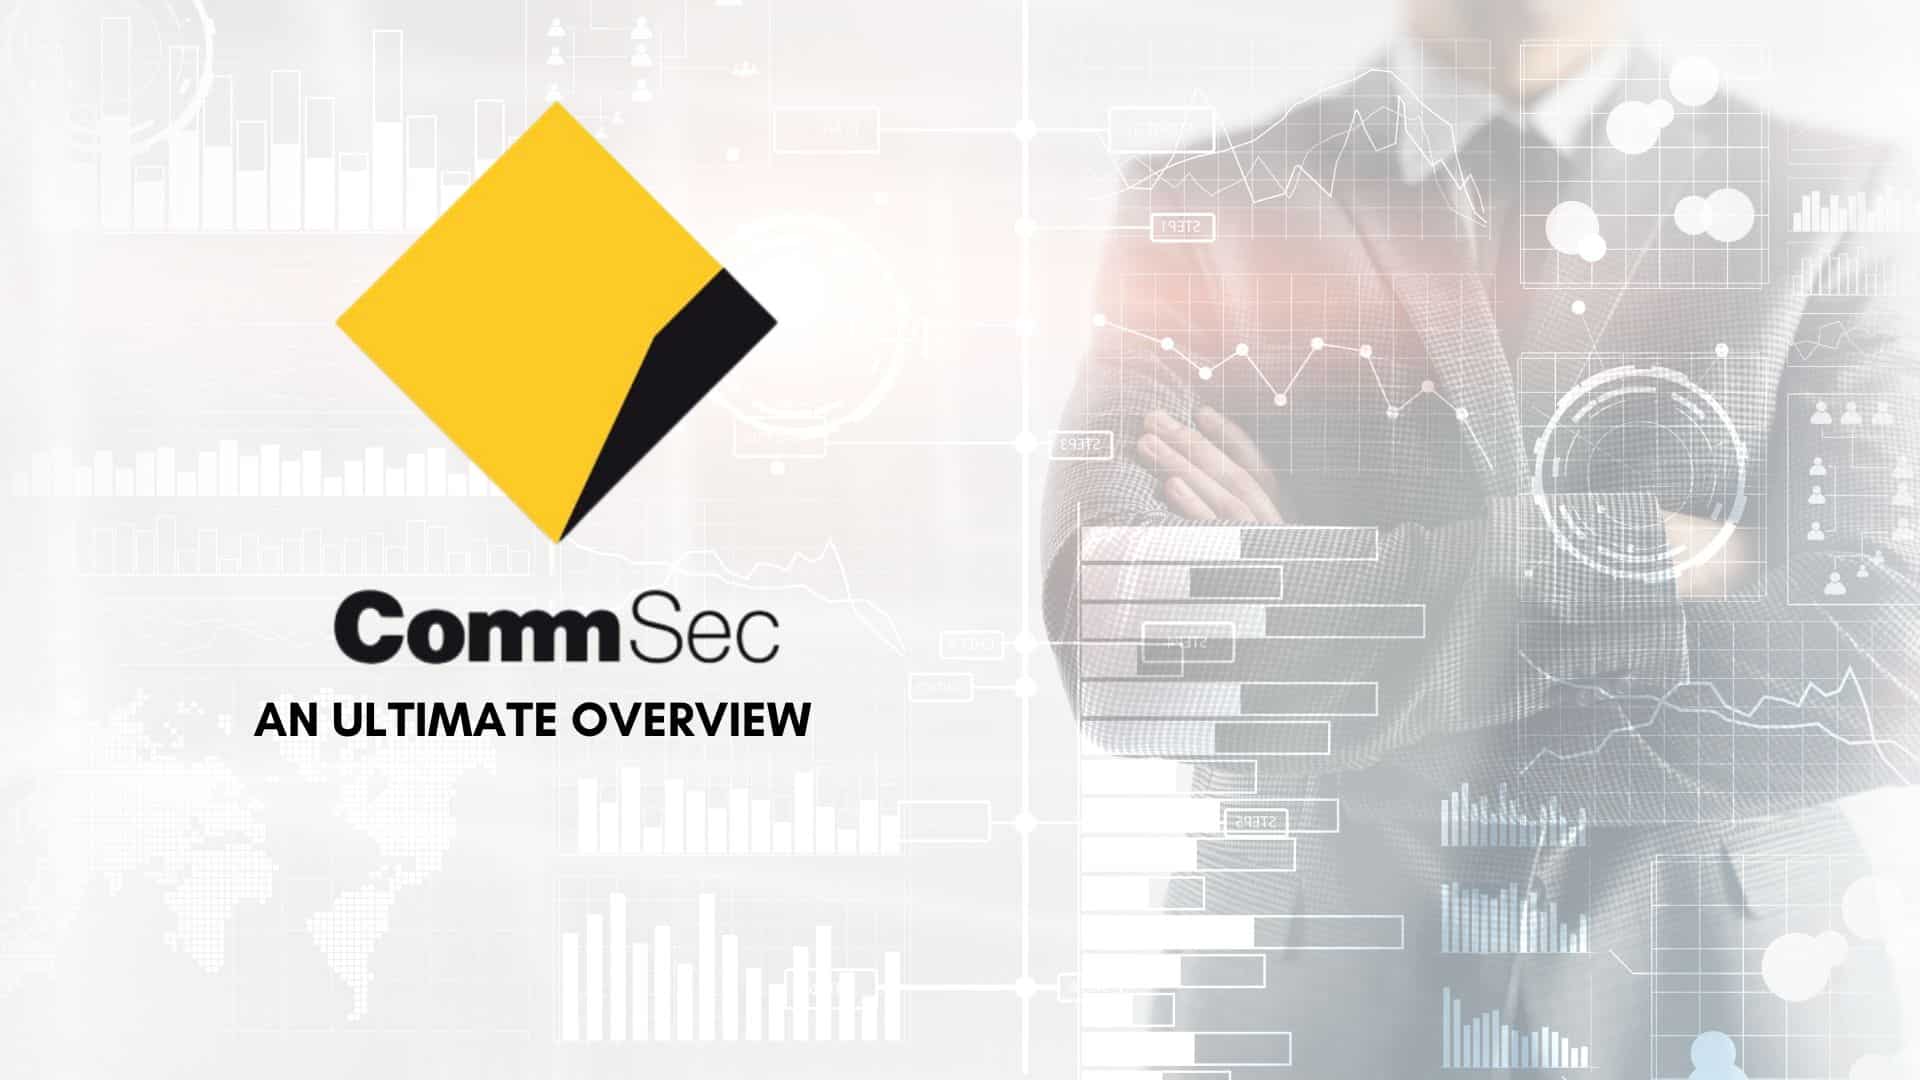 CommSec Overview